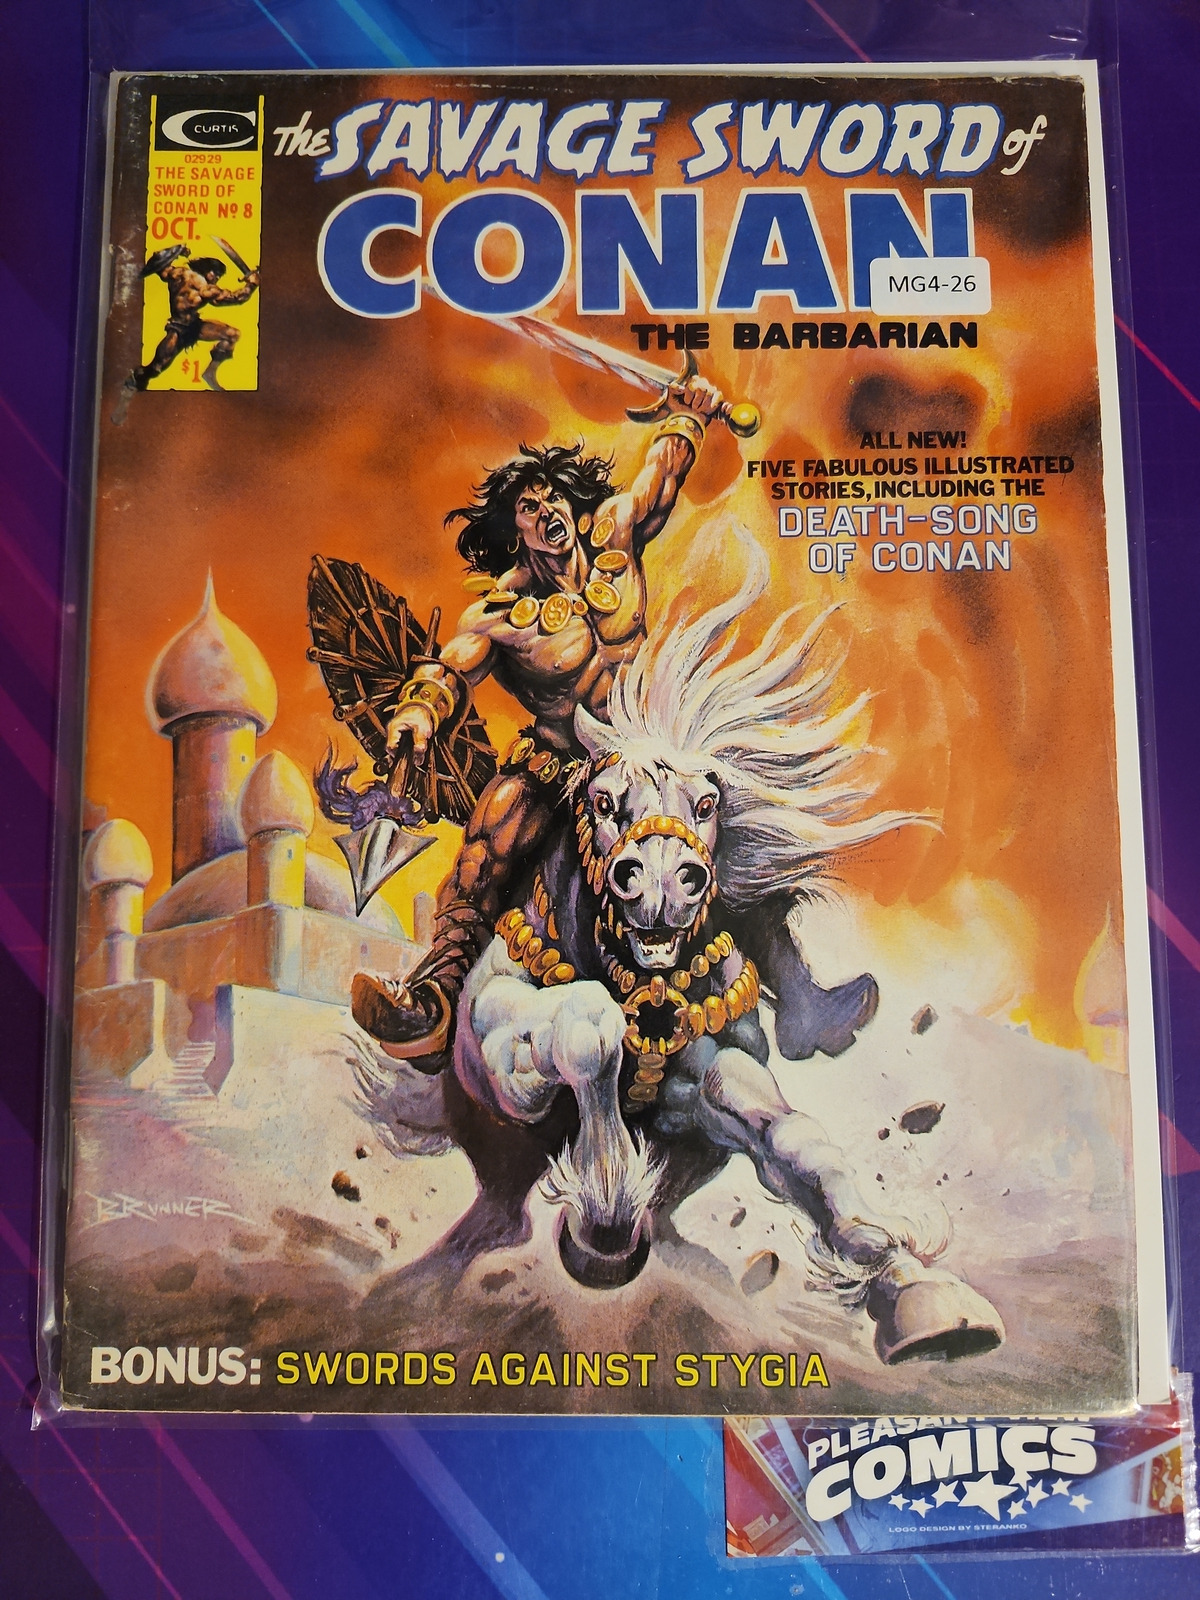 SAVAGE SWORD OF CONAN #8 VOL. 1 7.0 CURTIS COMIC INC COMIC BOOK MG4-26